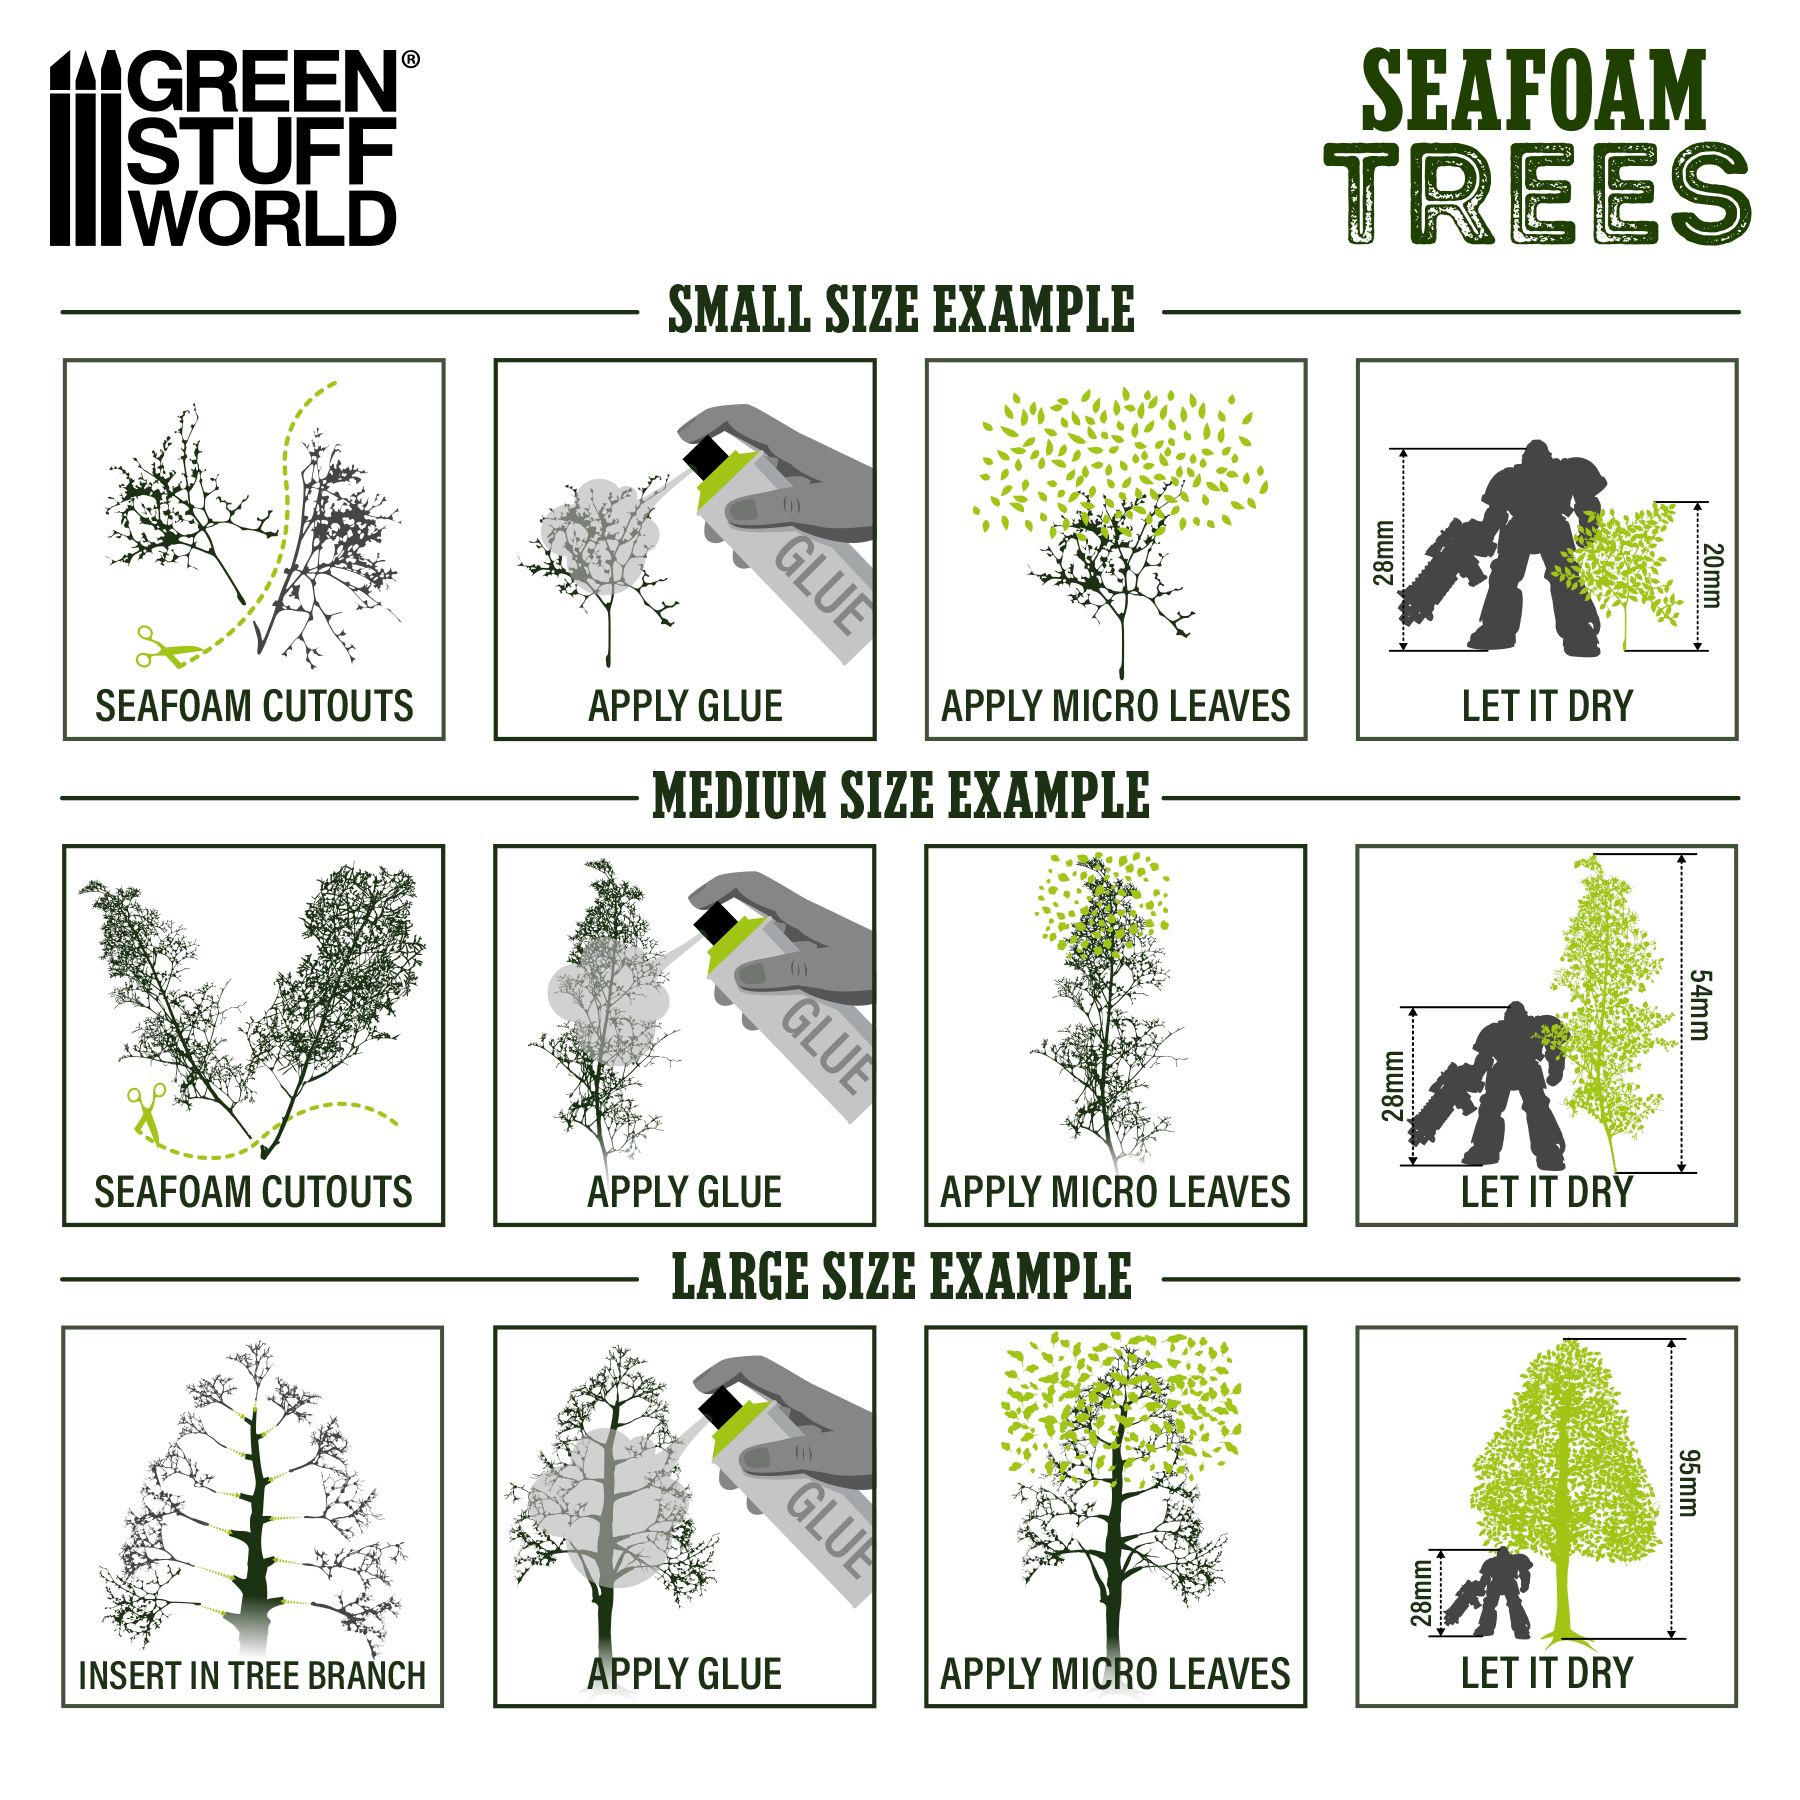 Seafoam Trees